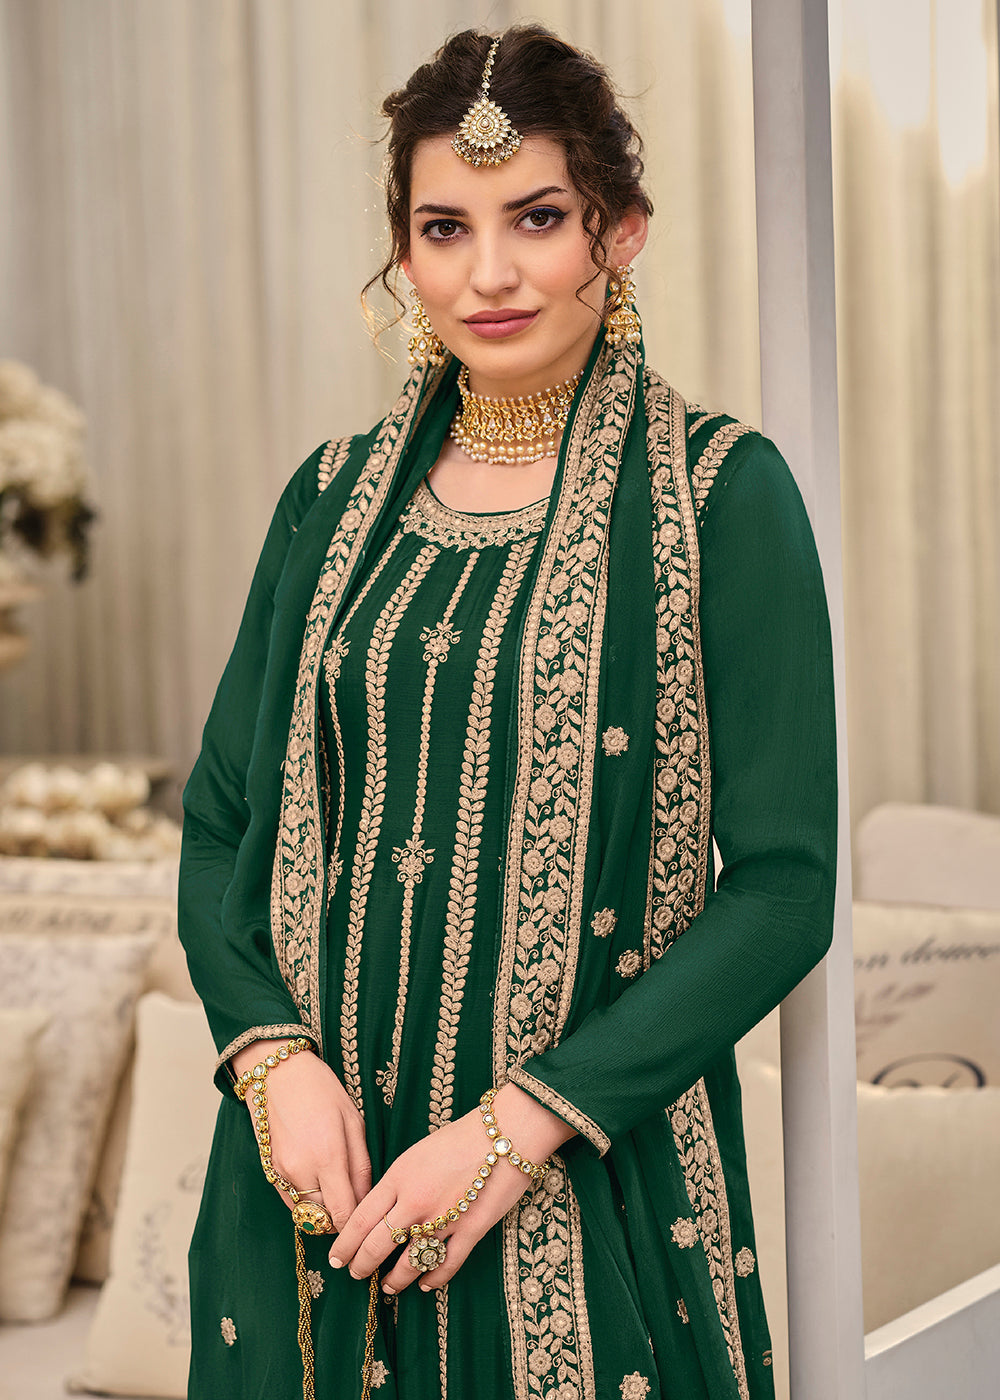 Buy Now Punjabi Style Enthralling Green Wedding Palazzo Suit Online in UK at Empress Clothing. 